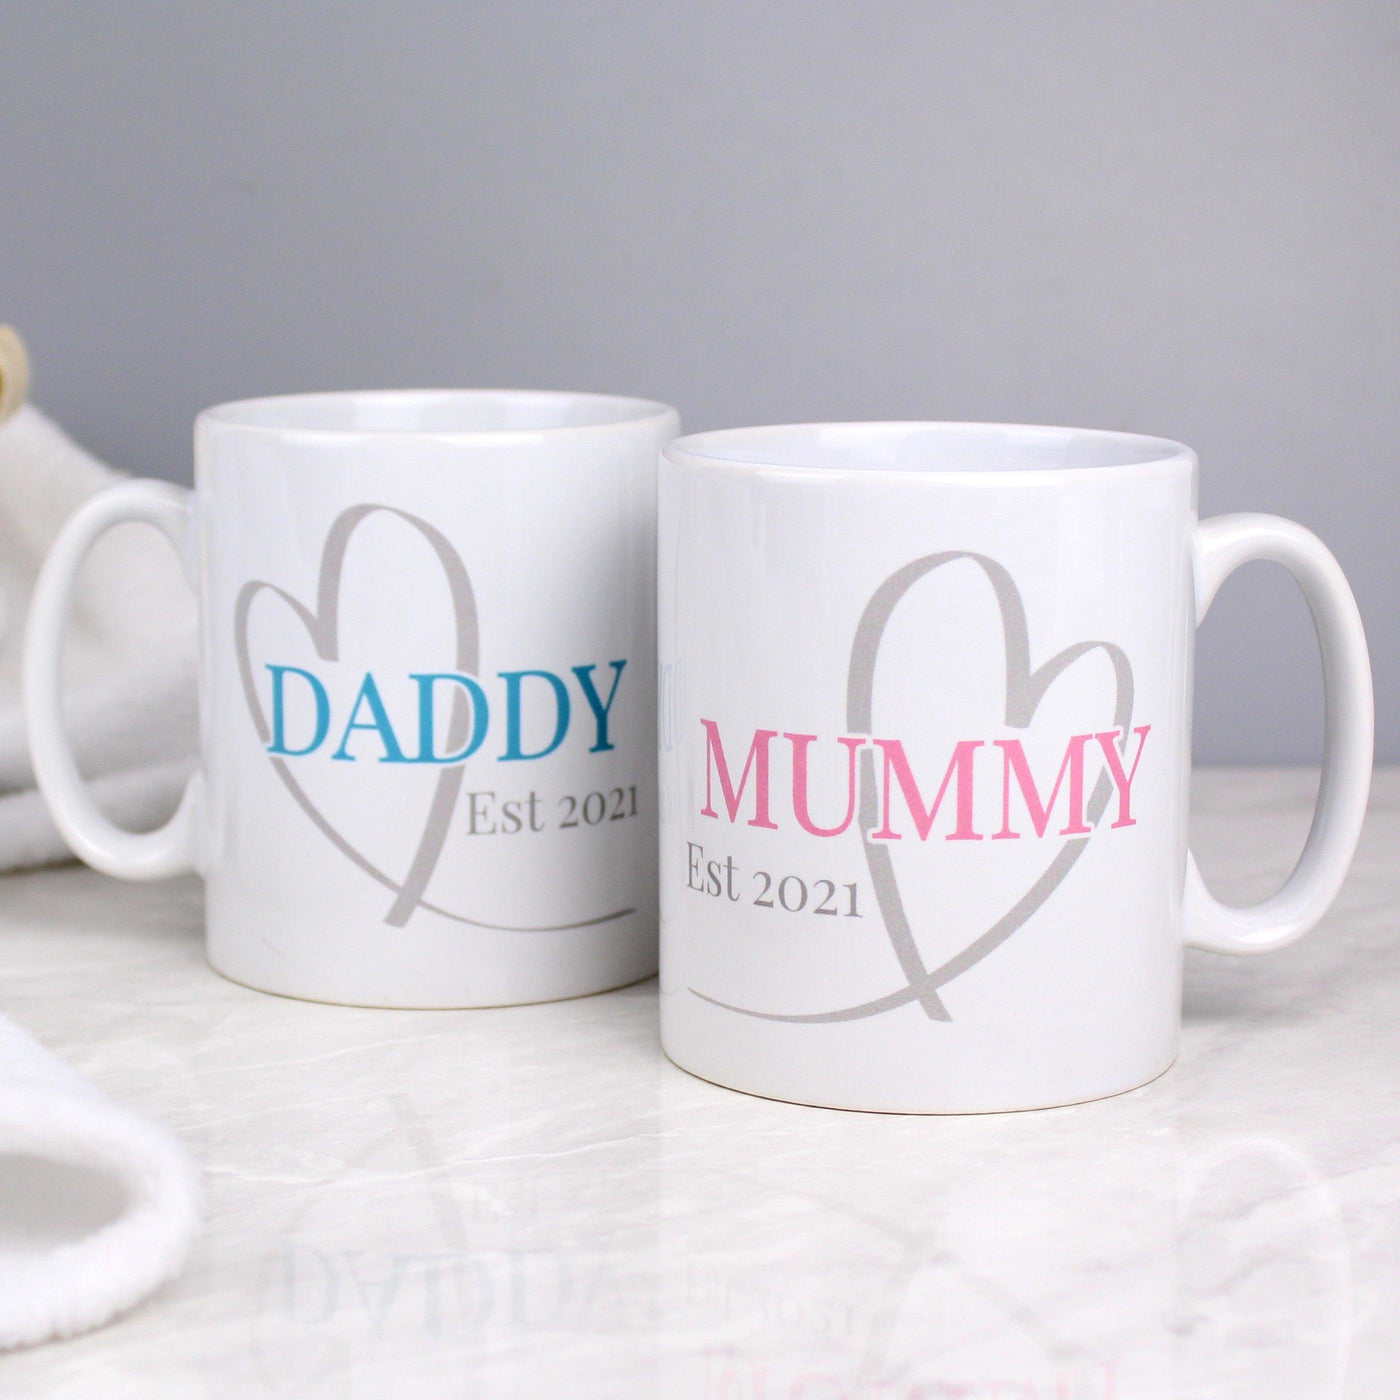 Personalised Mummy & Daddy Ceramic Mug Set - Shop Personalised Gifts